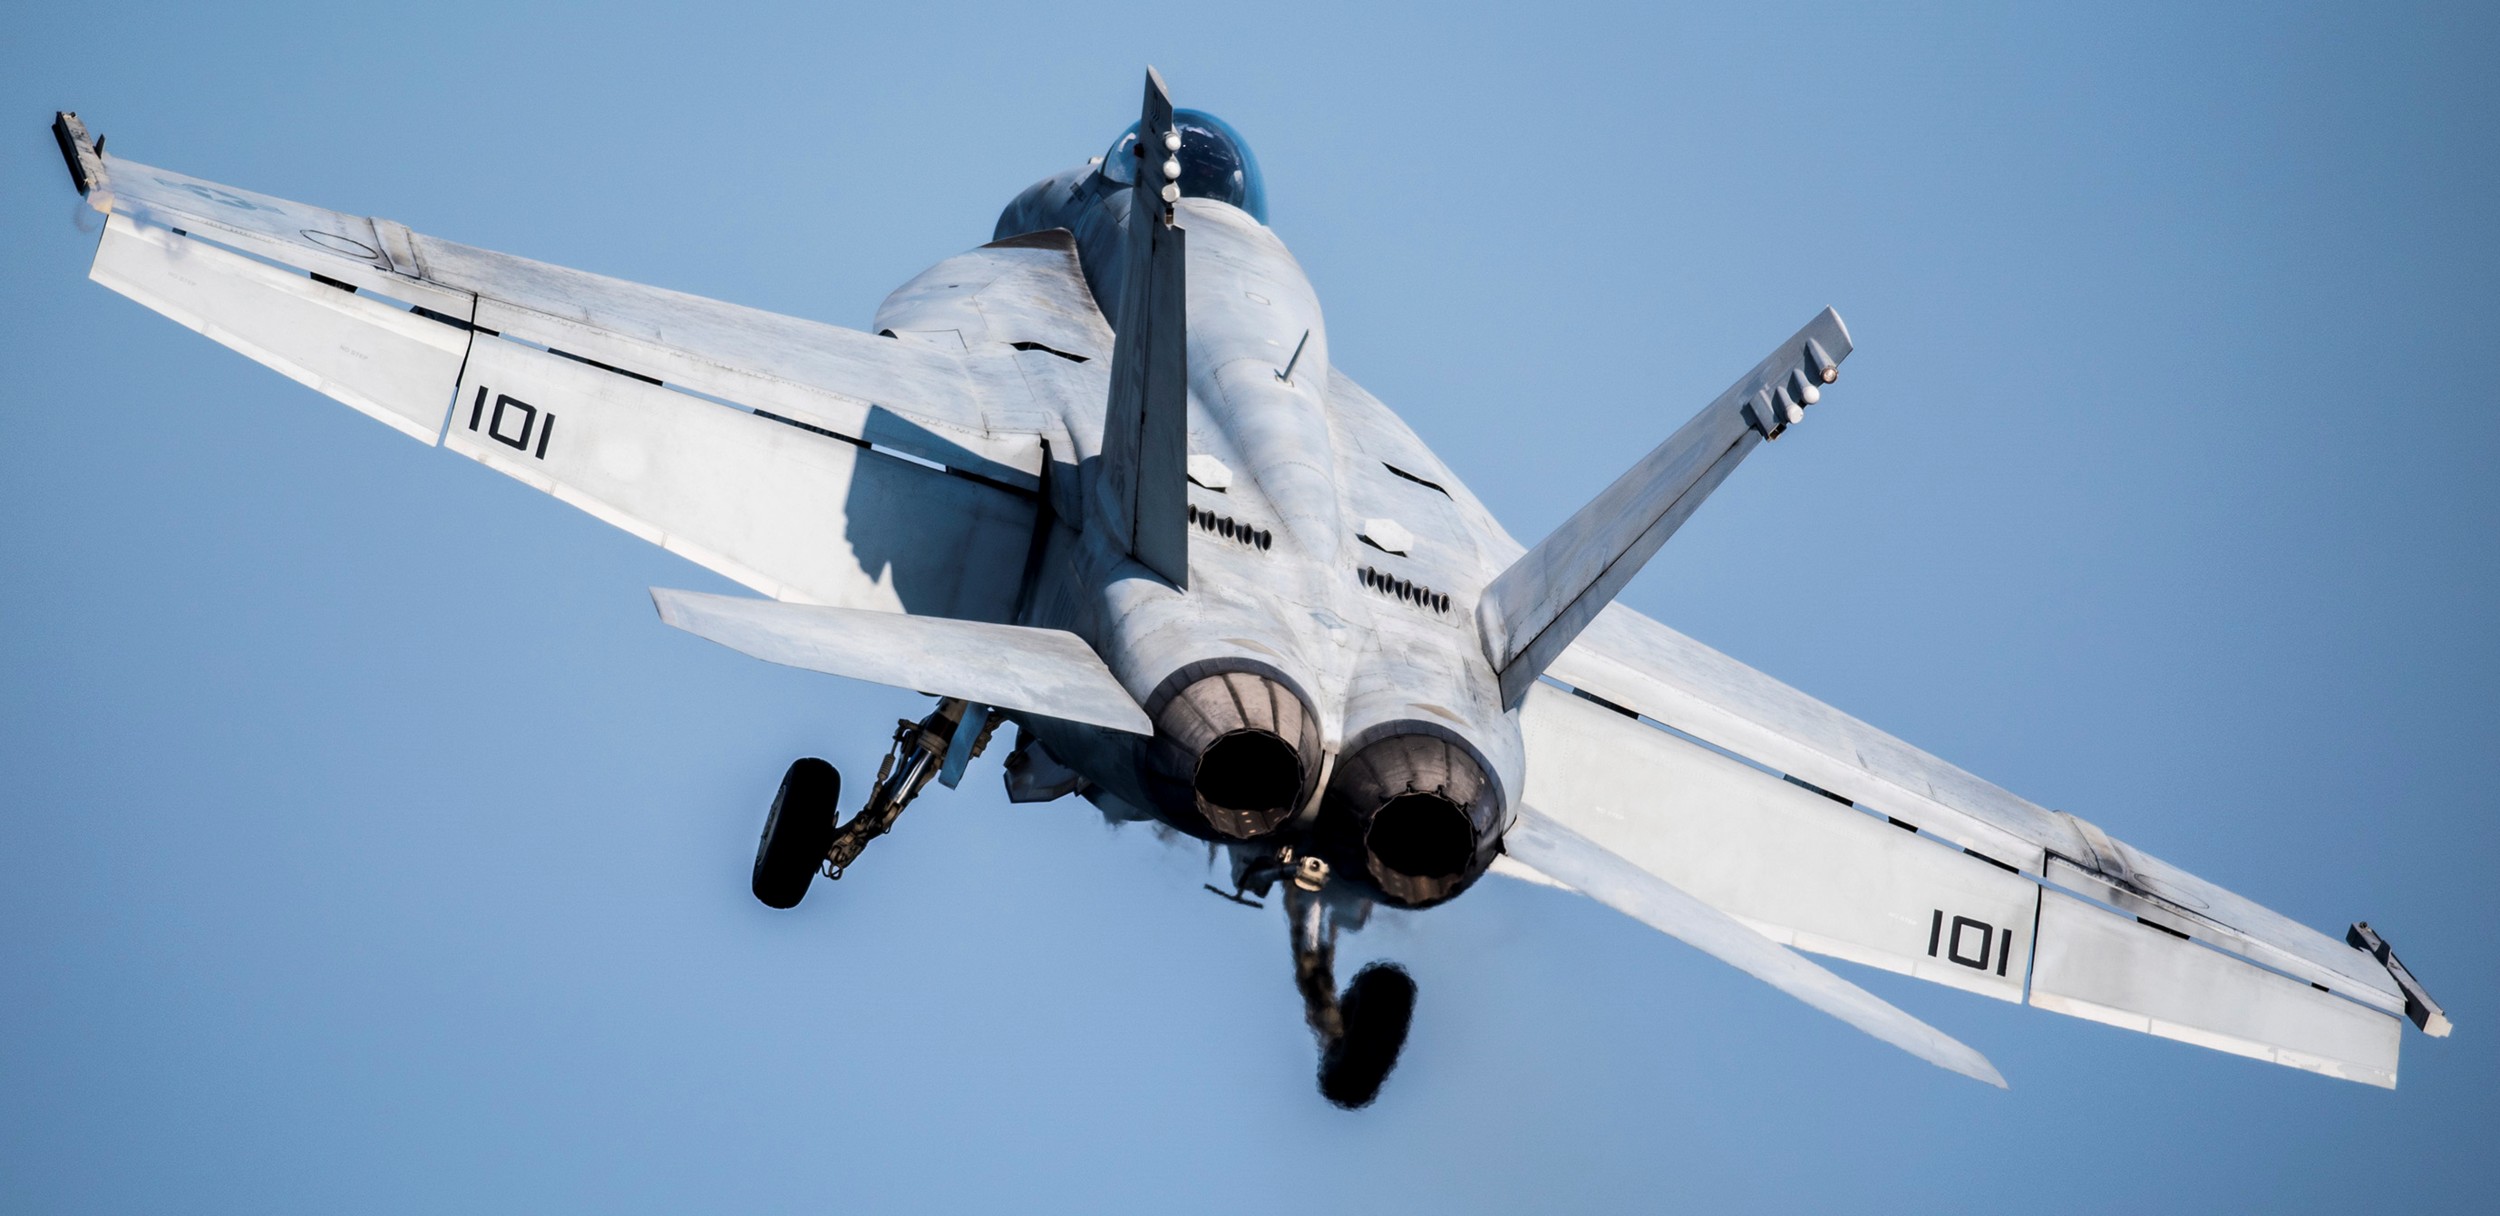 vfa-143 pukin dogs strike fighter squadron f/a-18e super hornet cvw-7 uss harry s. truman cvn-75 2015 09